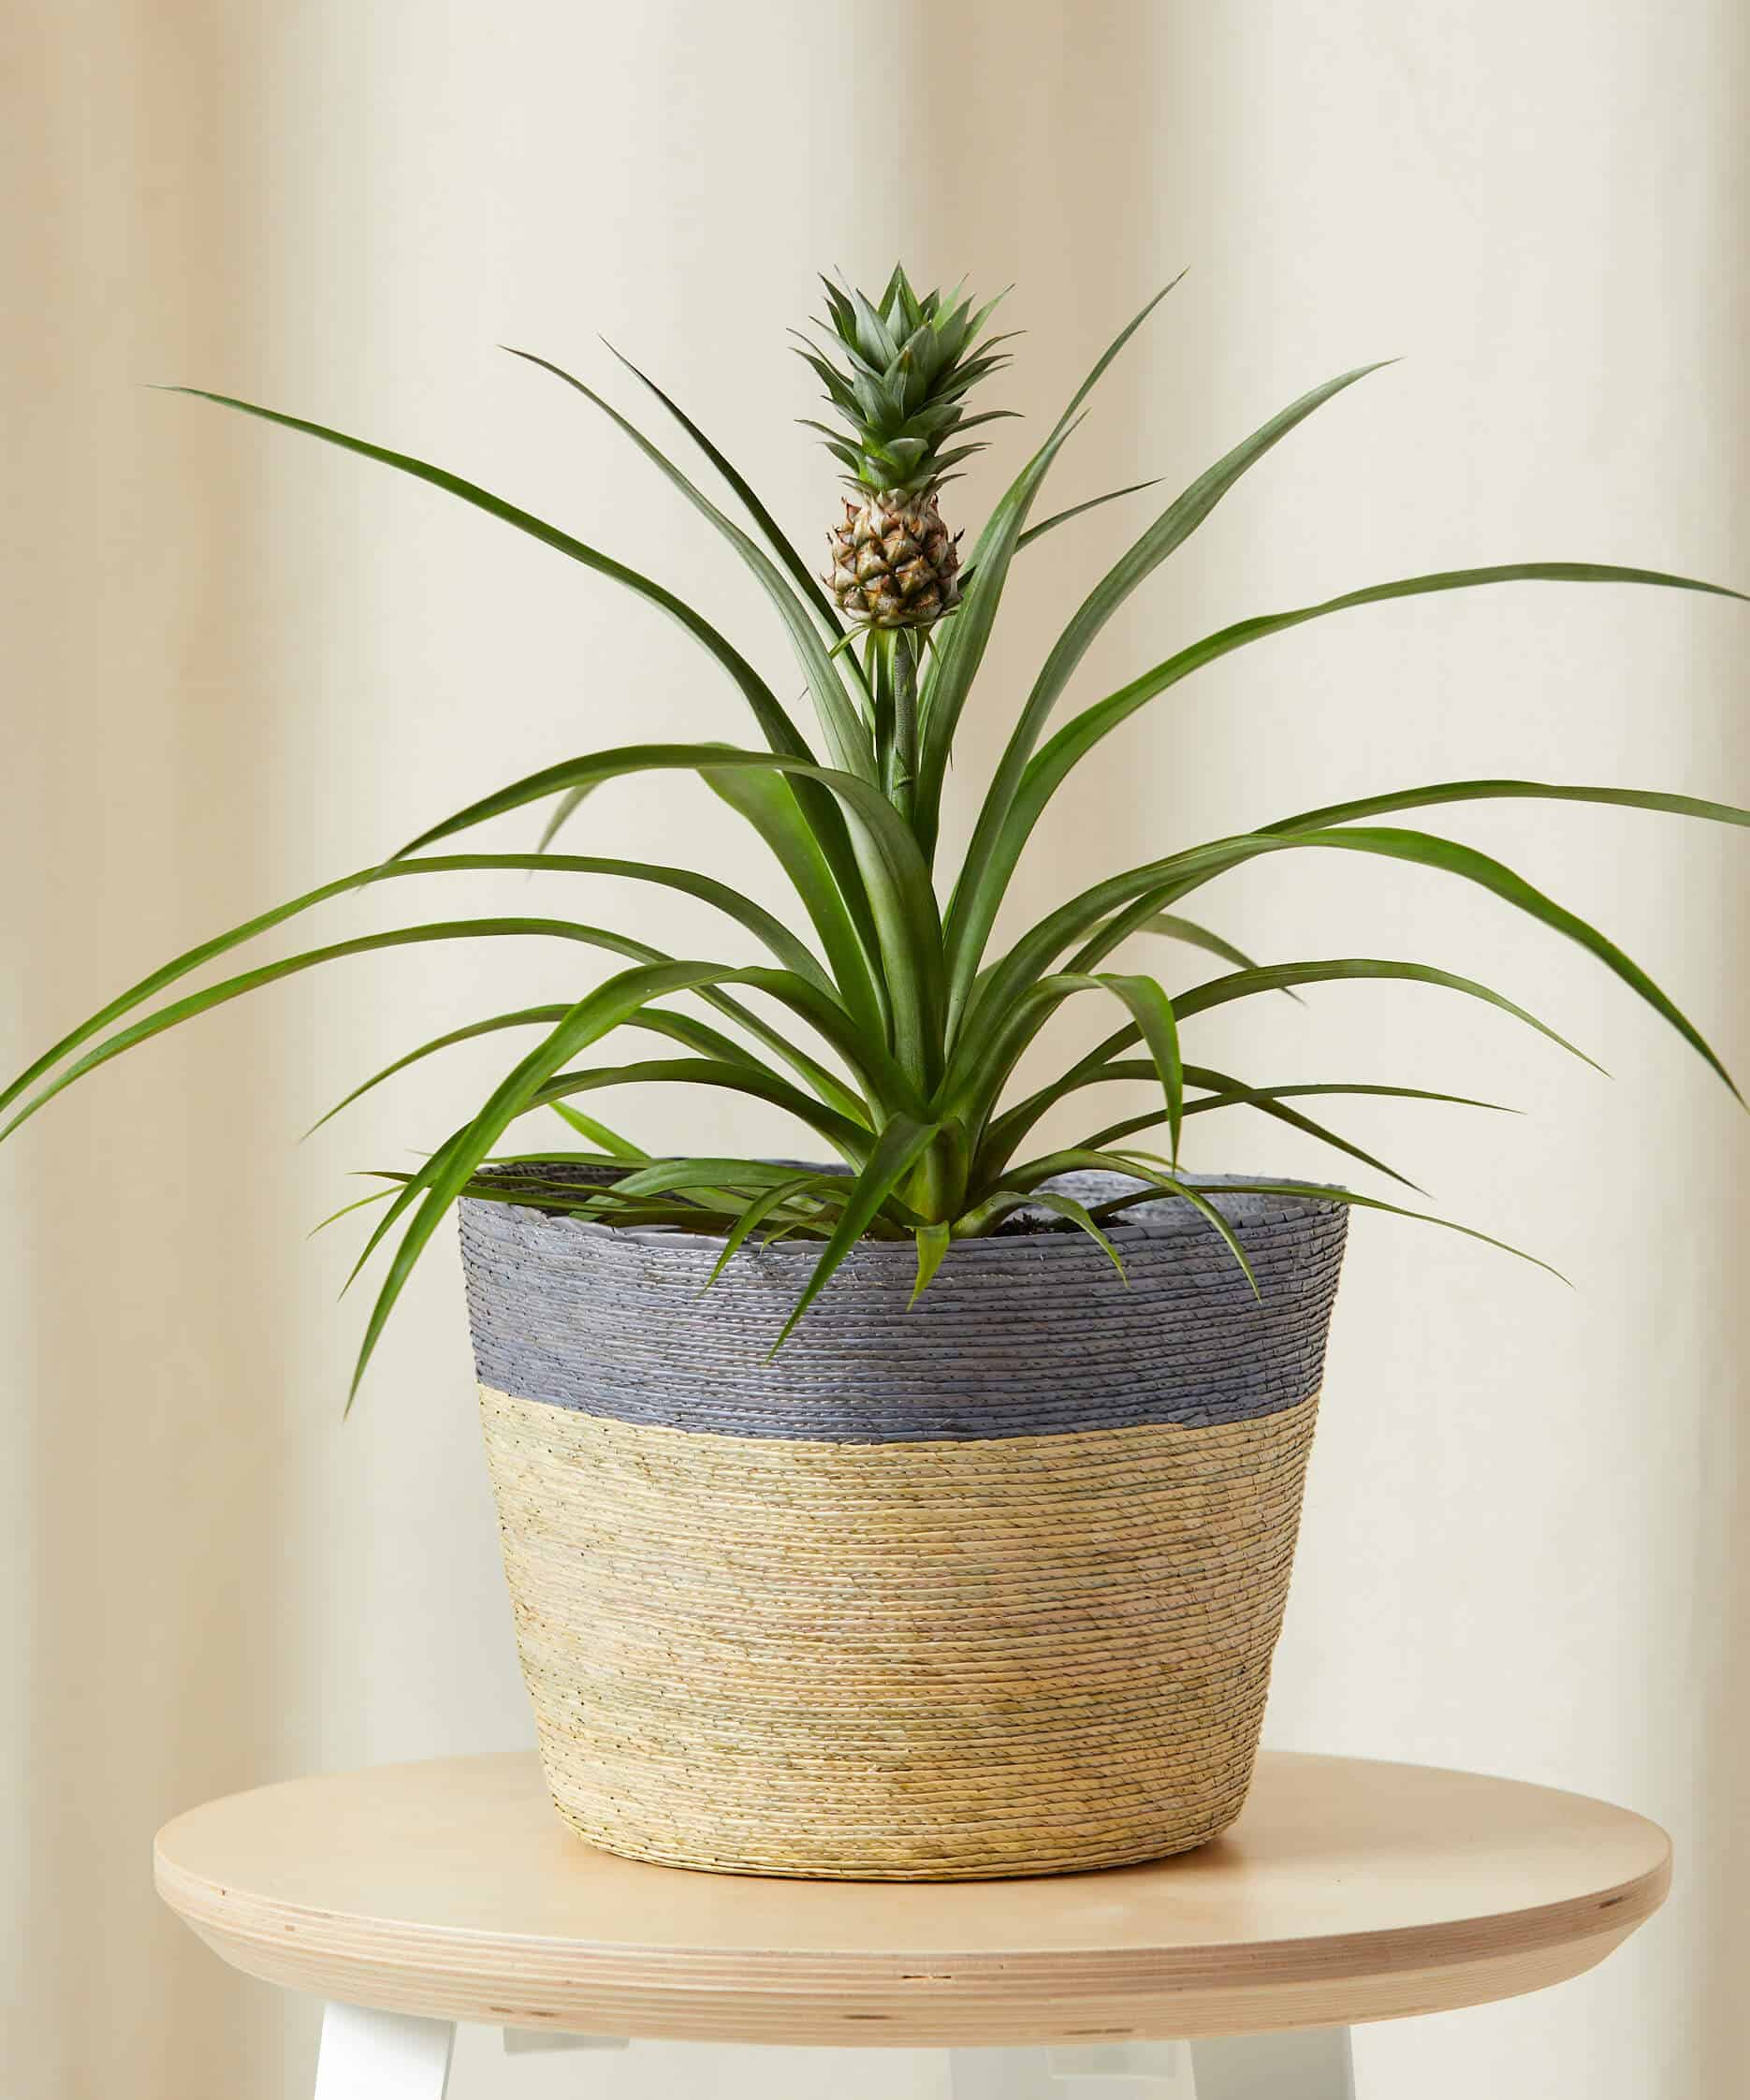 Add A Bromeliad Pineapple For A Unique Decor Piece